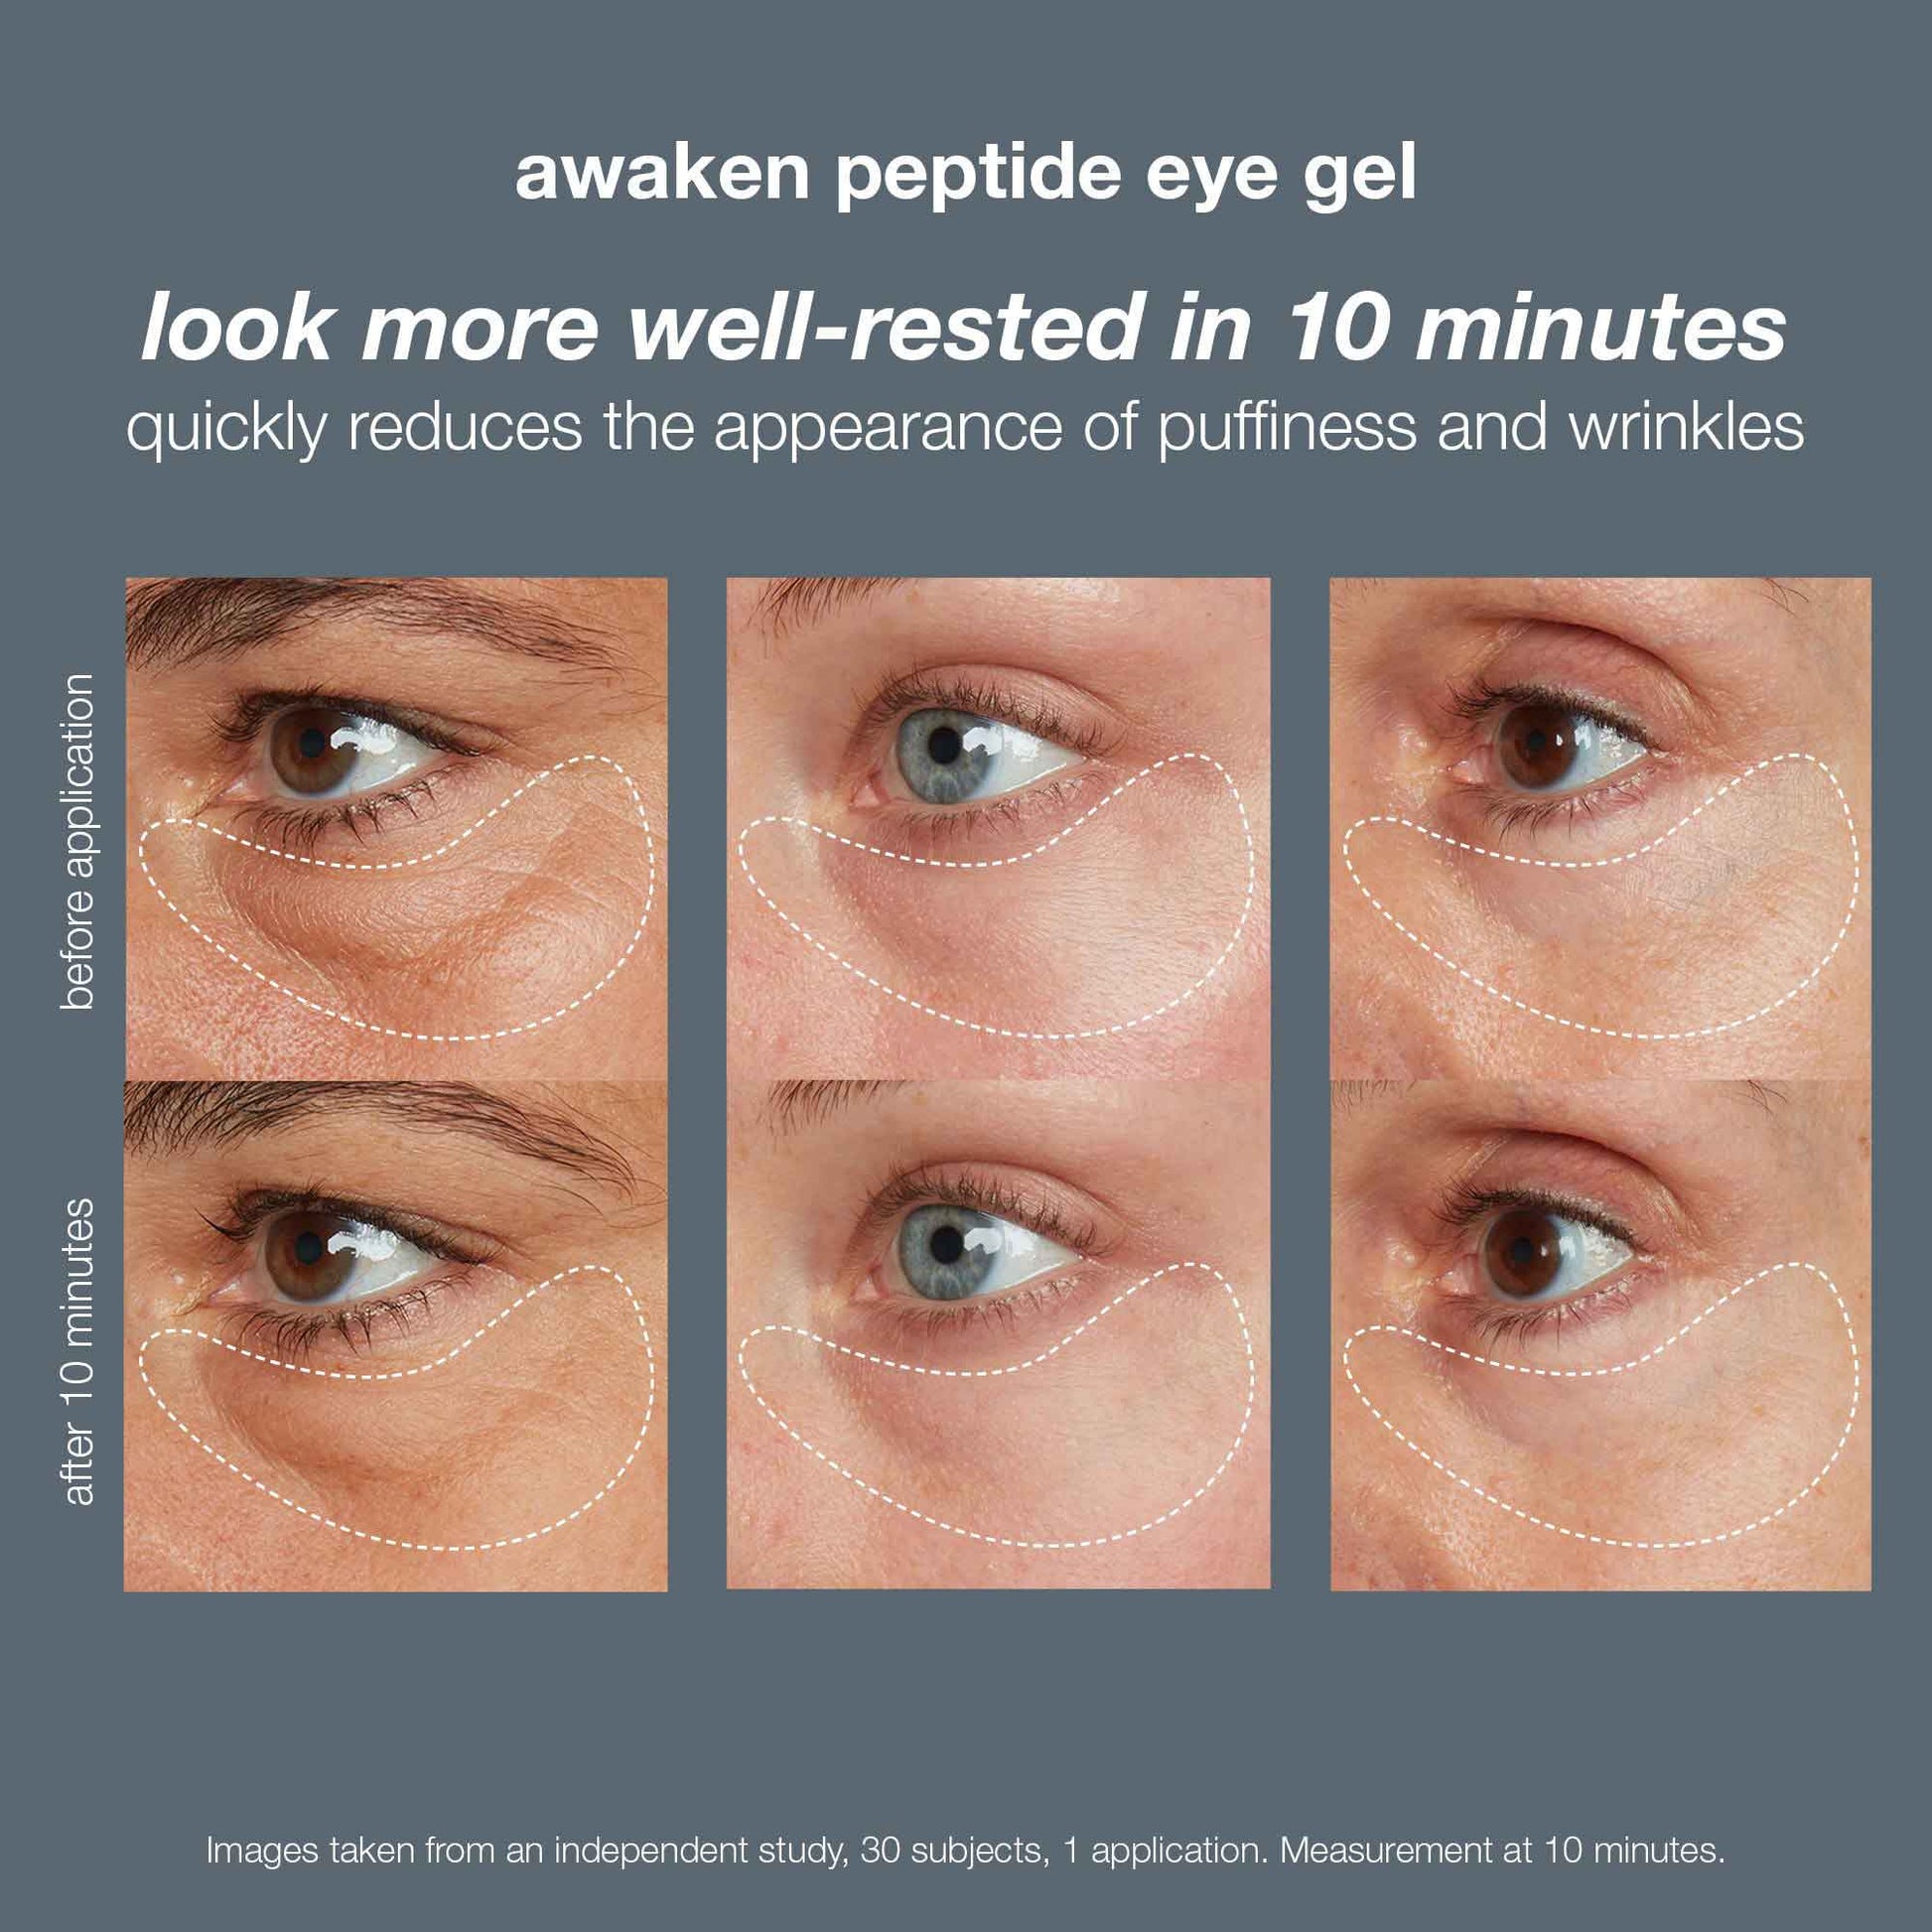 awaken peptide eye gel before and after